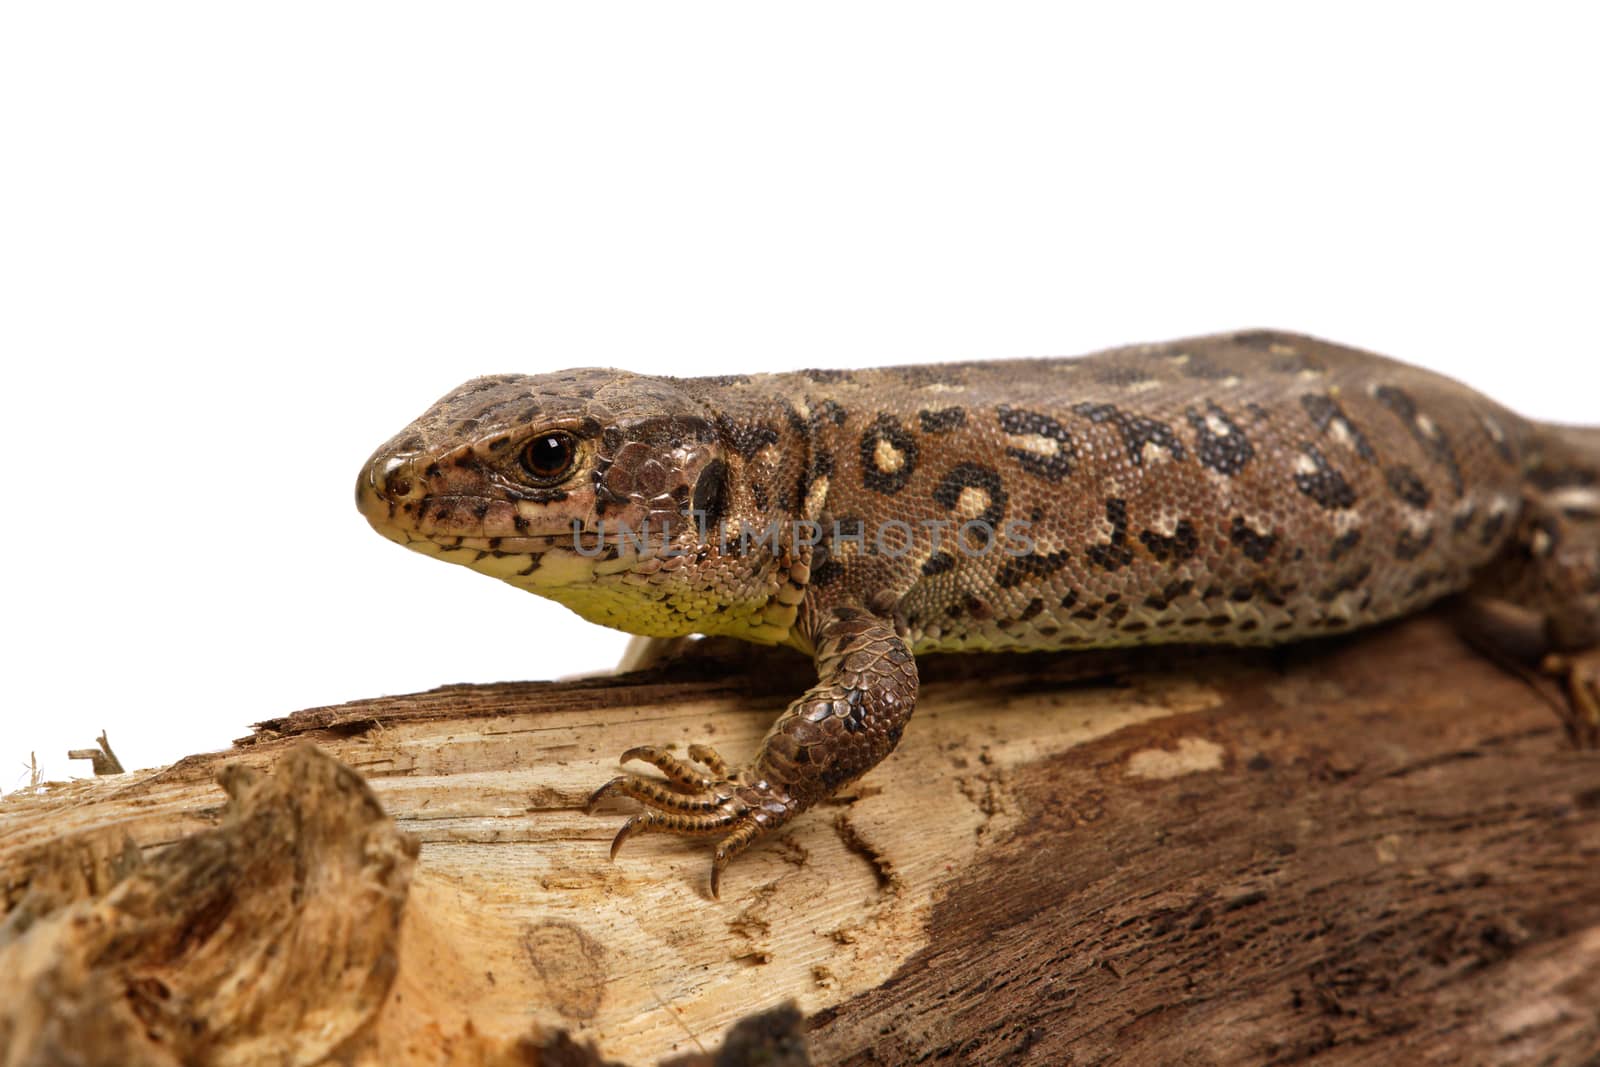 Lizard (Lacerta agilis) on a white background by neryx